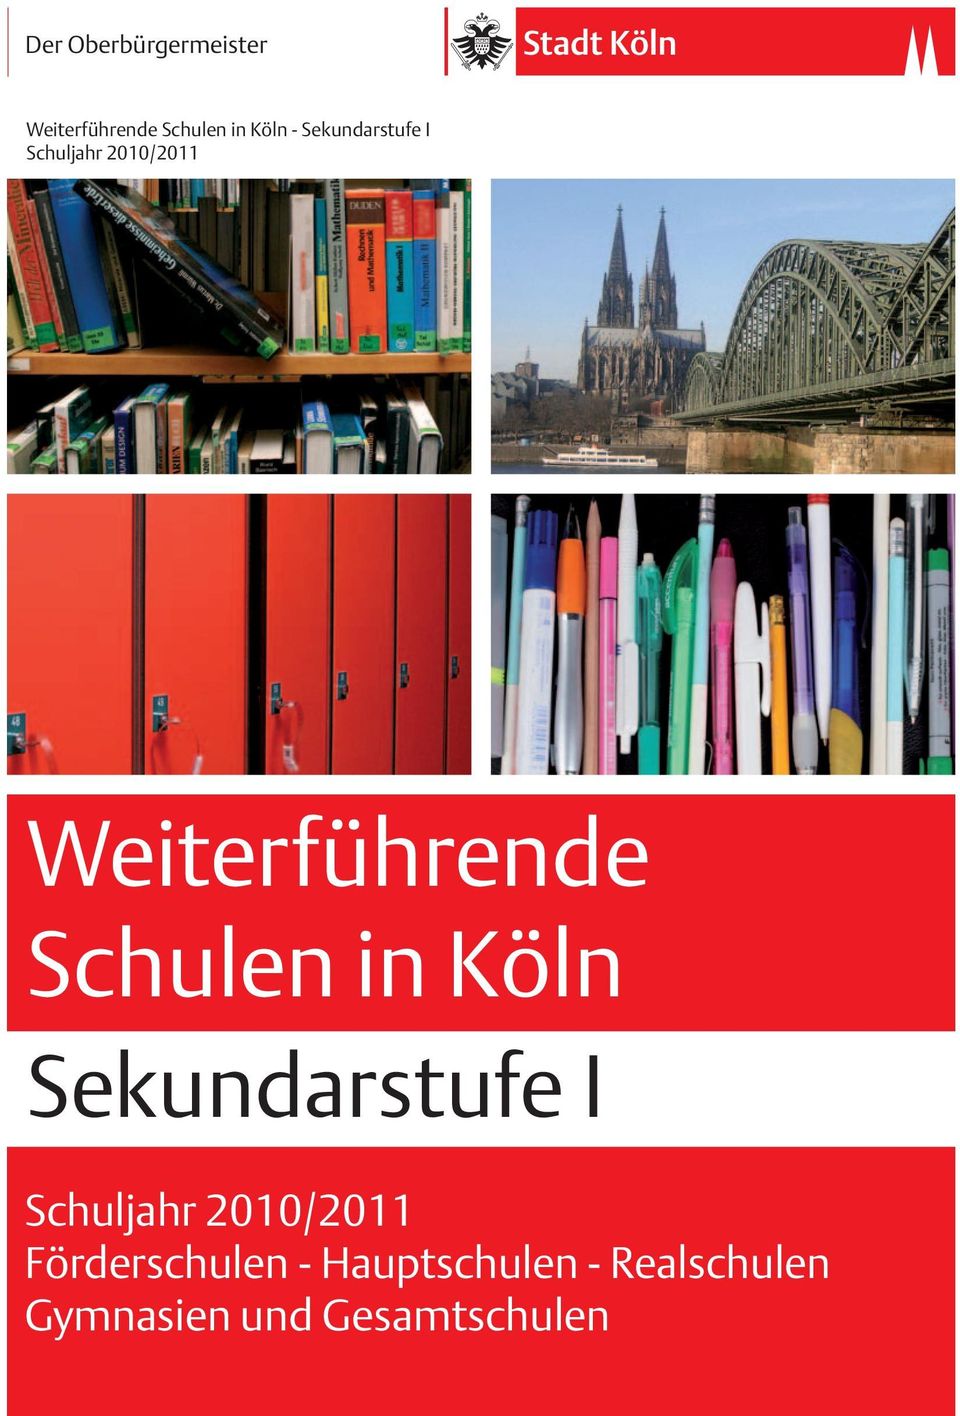 Schulen in Köln Sekundarstufe I Schuljahr 2010/2011